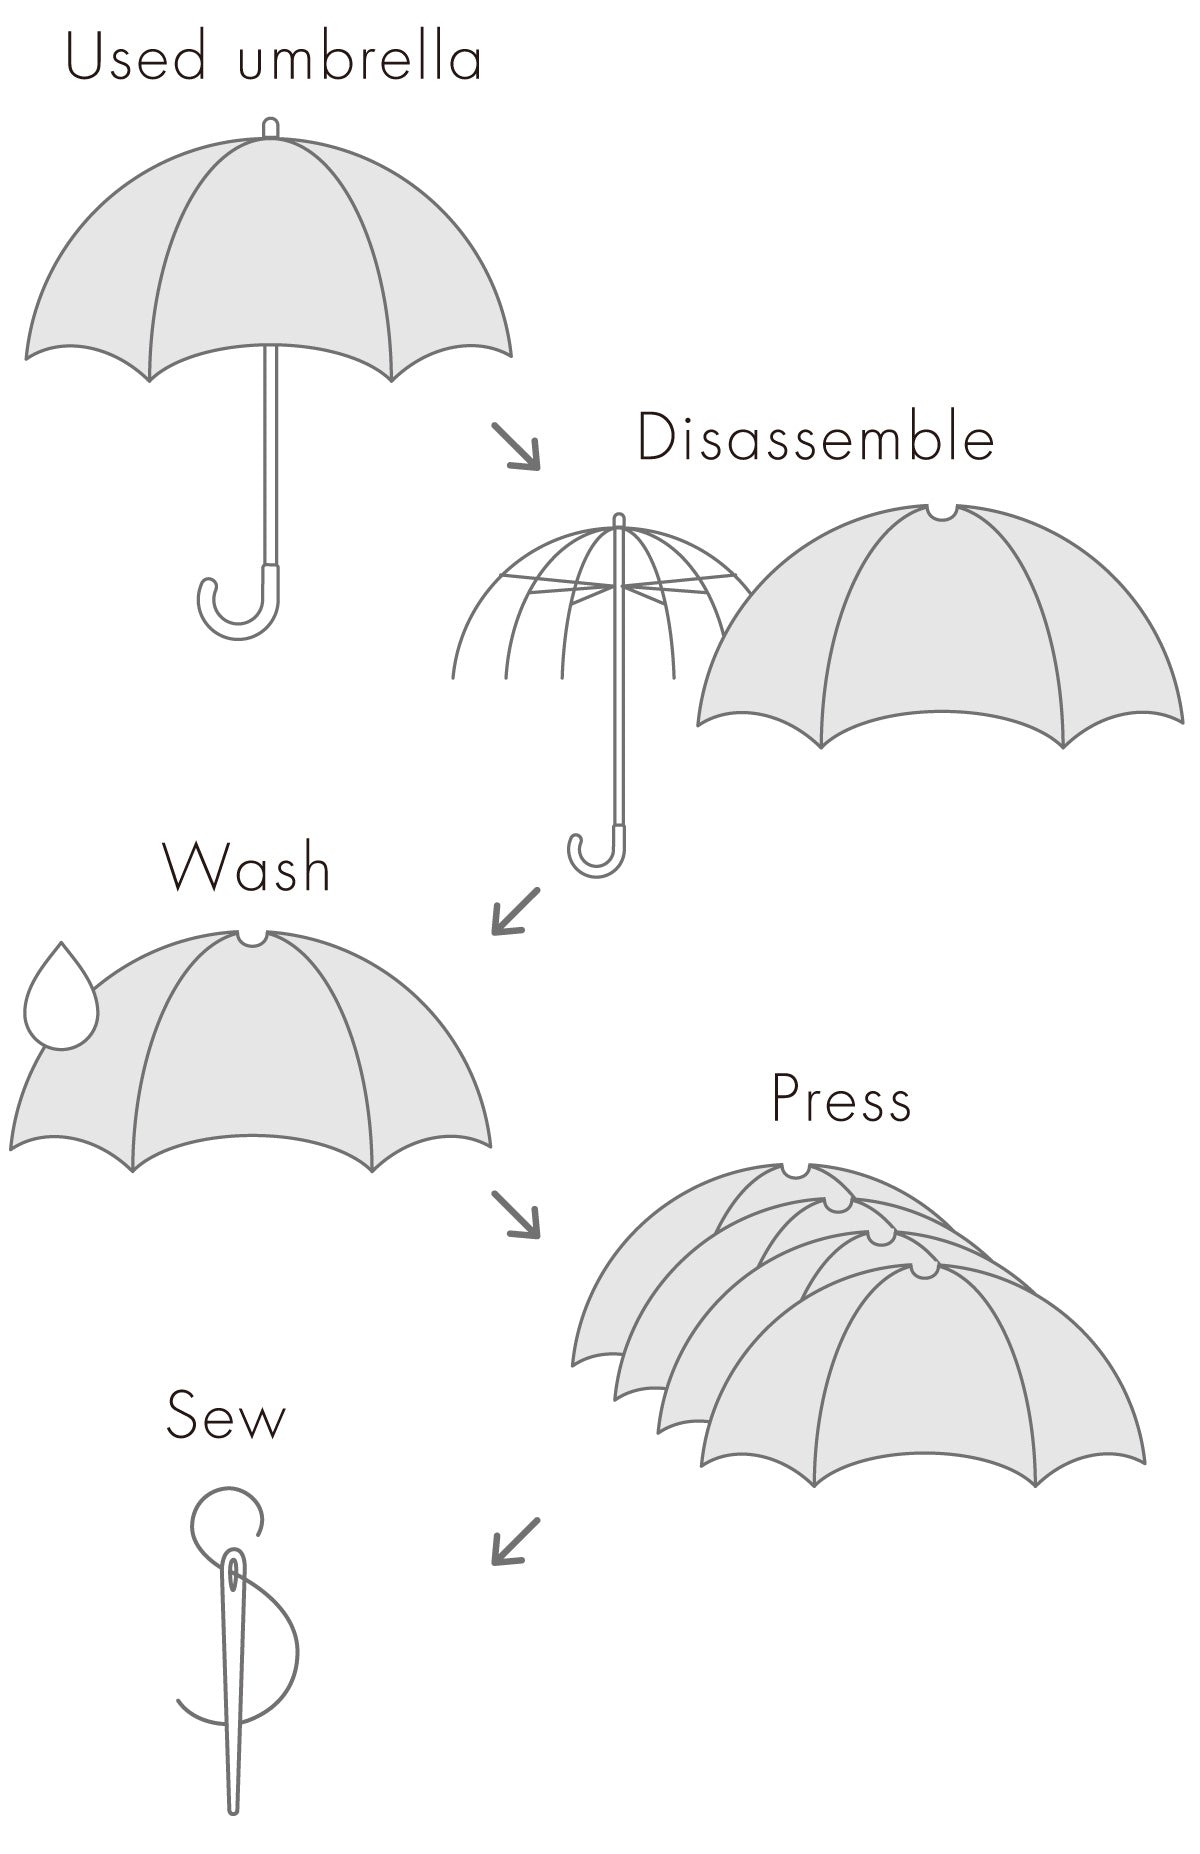 Plasticity ビニール傘の素材 グラスレイン と製造工程について